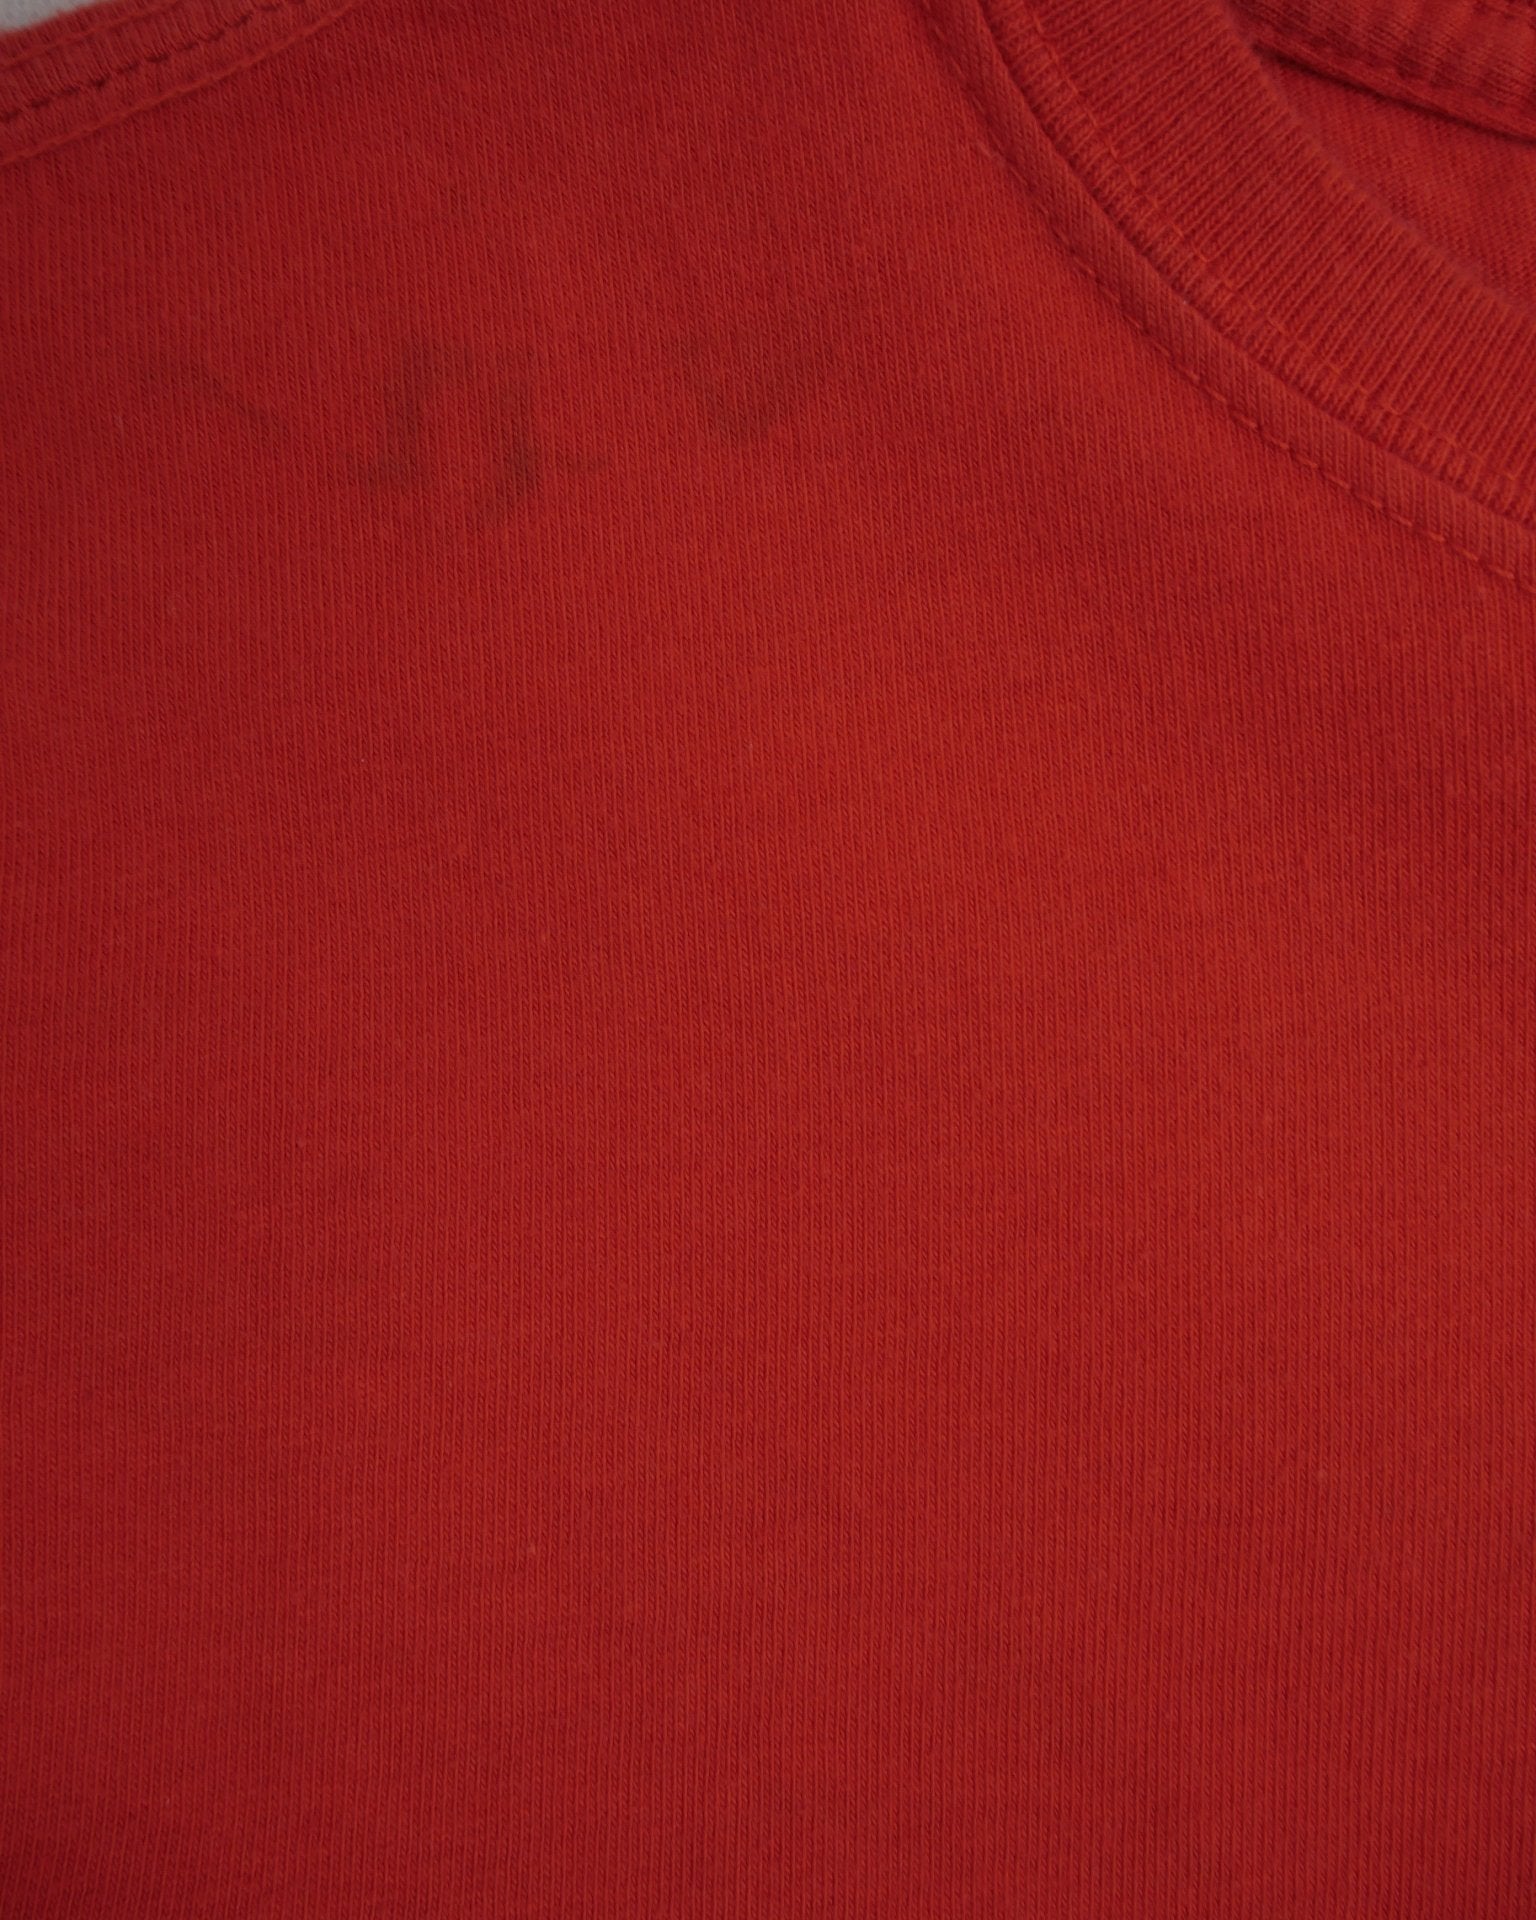 Polo Ralph Lauren embroidered Logo orange L/S Shirt - Peeces